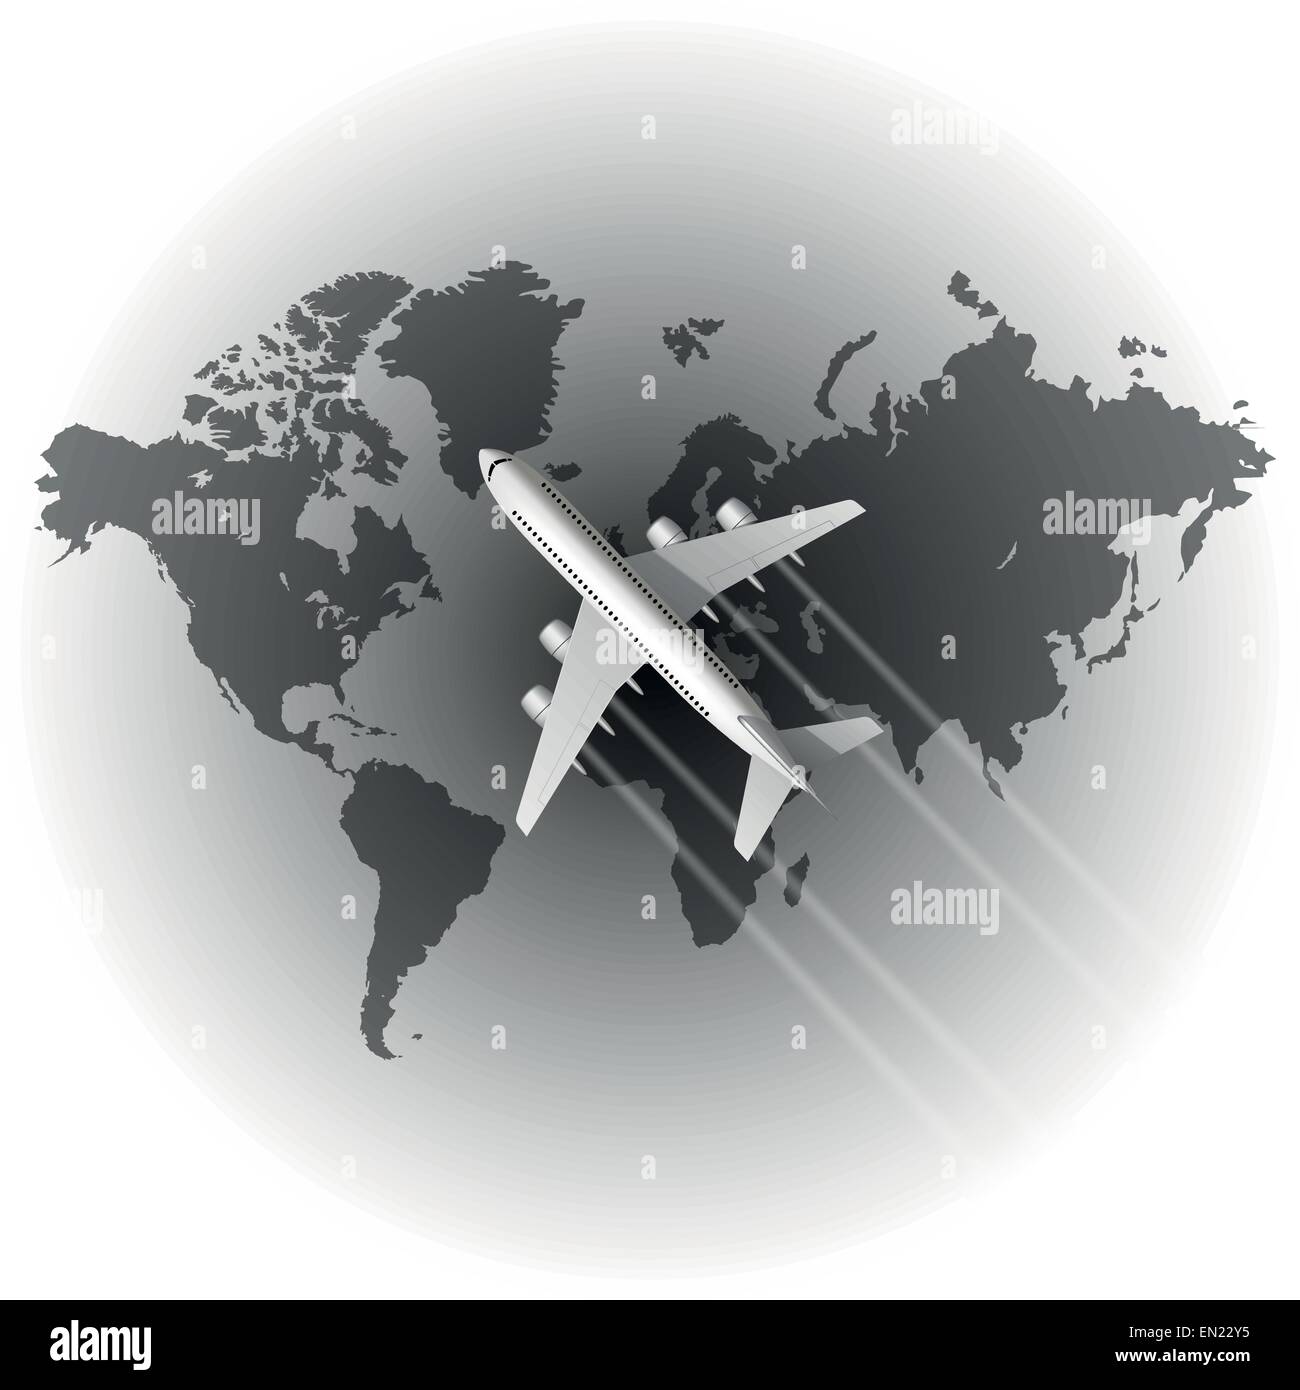 Flugzeug über die Weltkarte. Vektor-illustration Stock Vektor